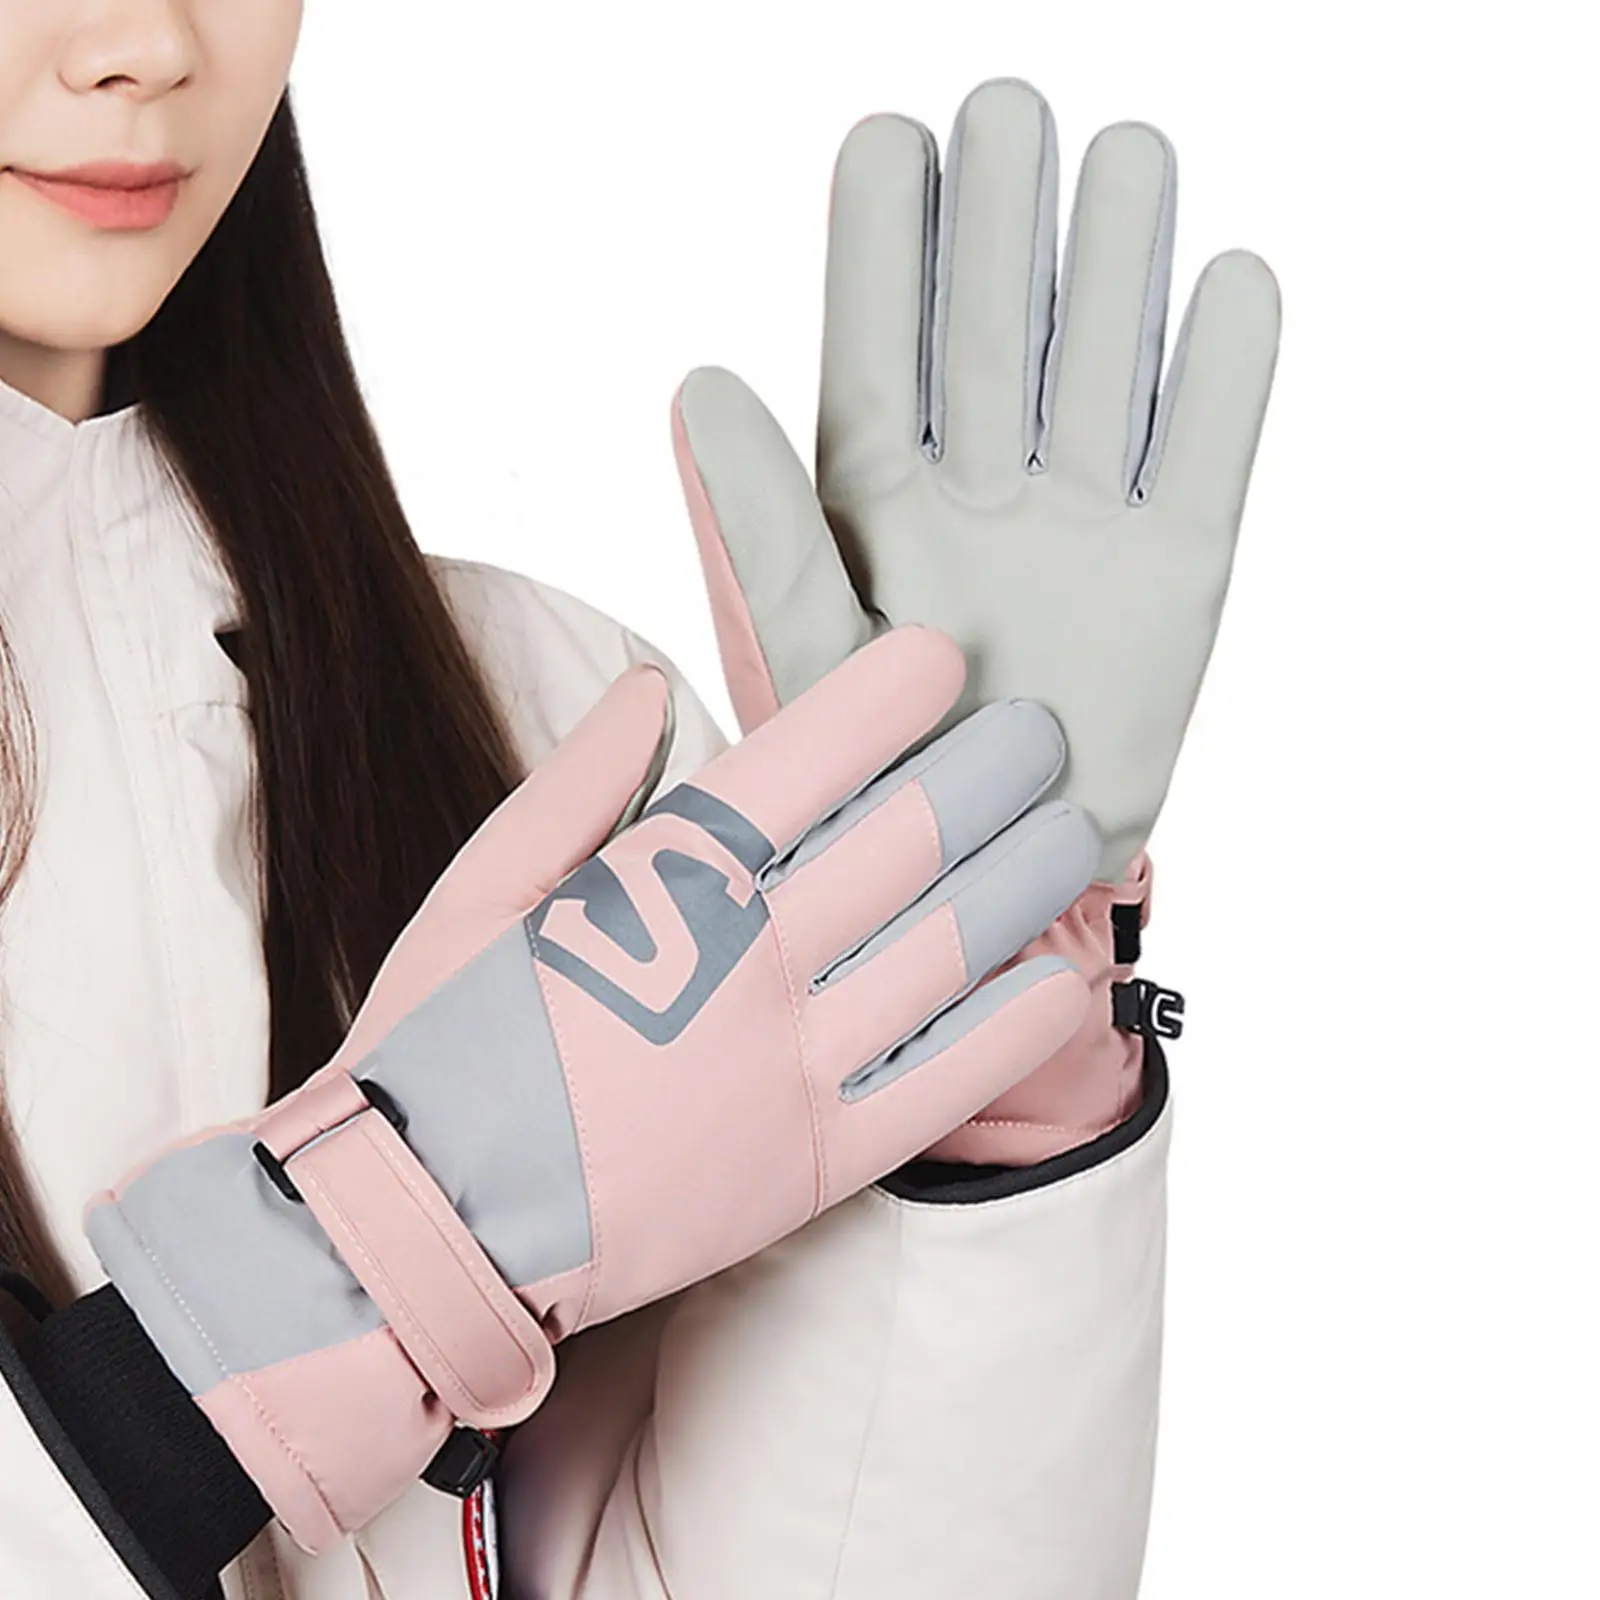 Winter Ski Gloves Touchscreen Mittens Snow Ski Gloves for Snow Skiing Biking